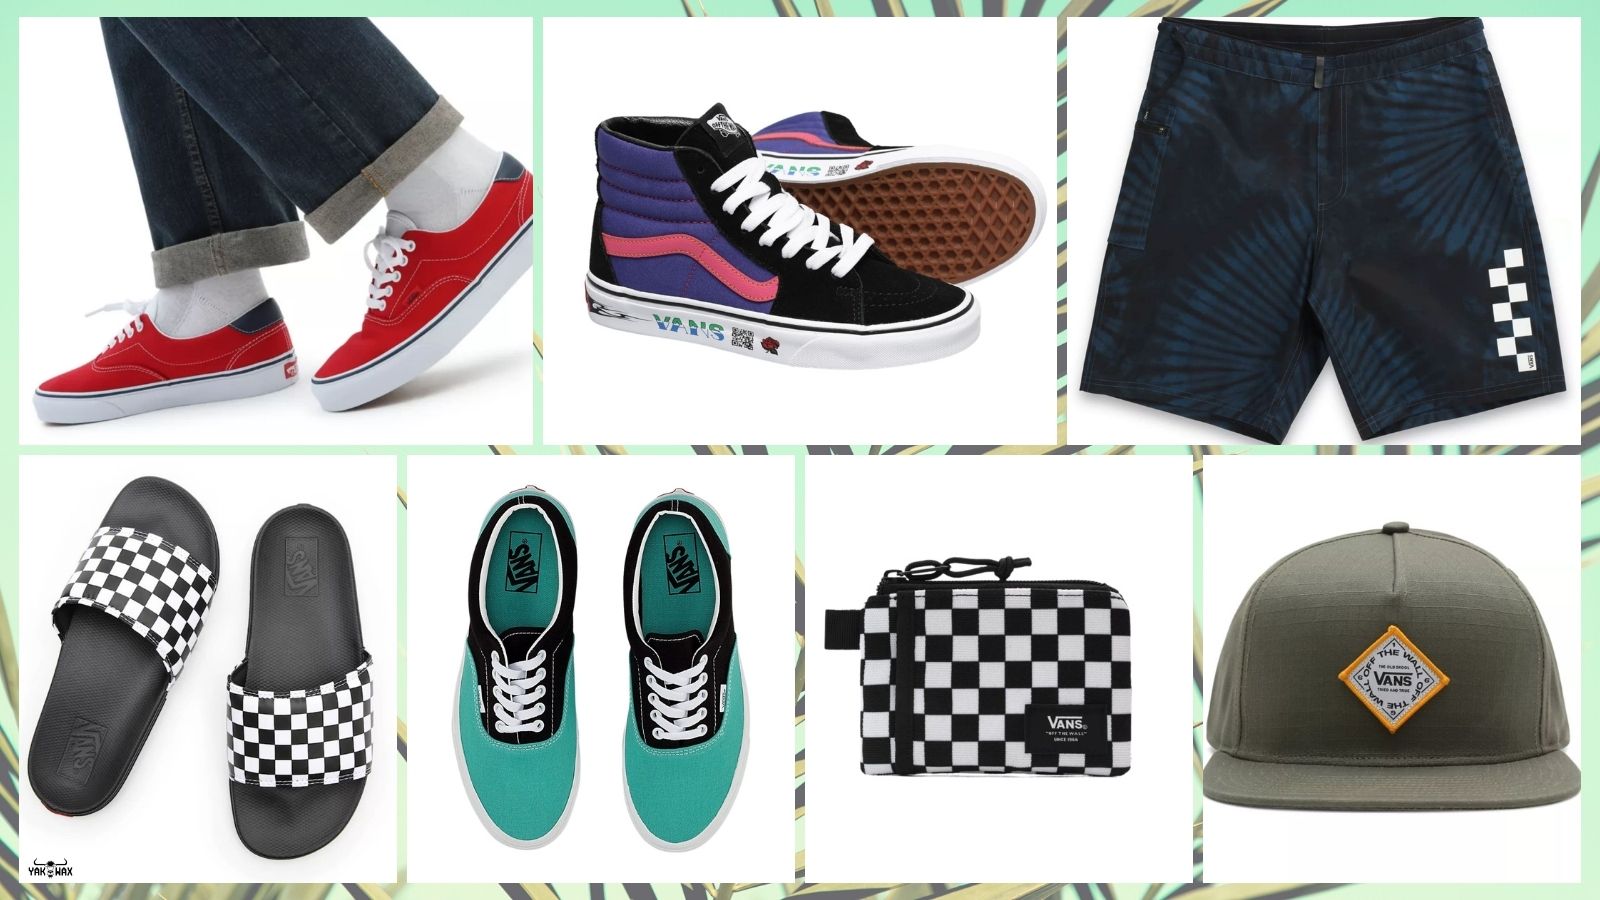 Vans-Skate-Shoes-Accessories-Summer-2021